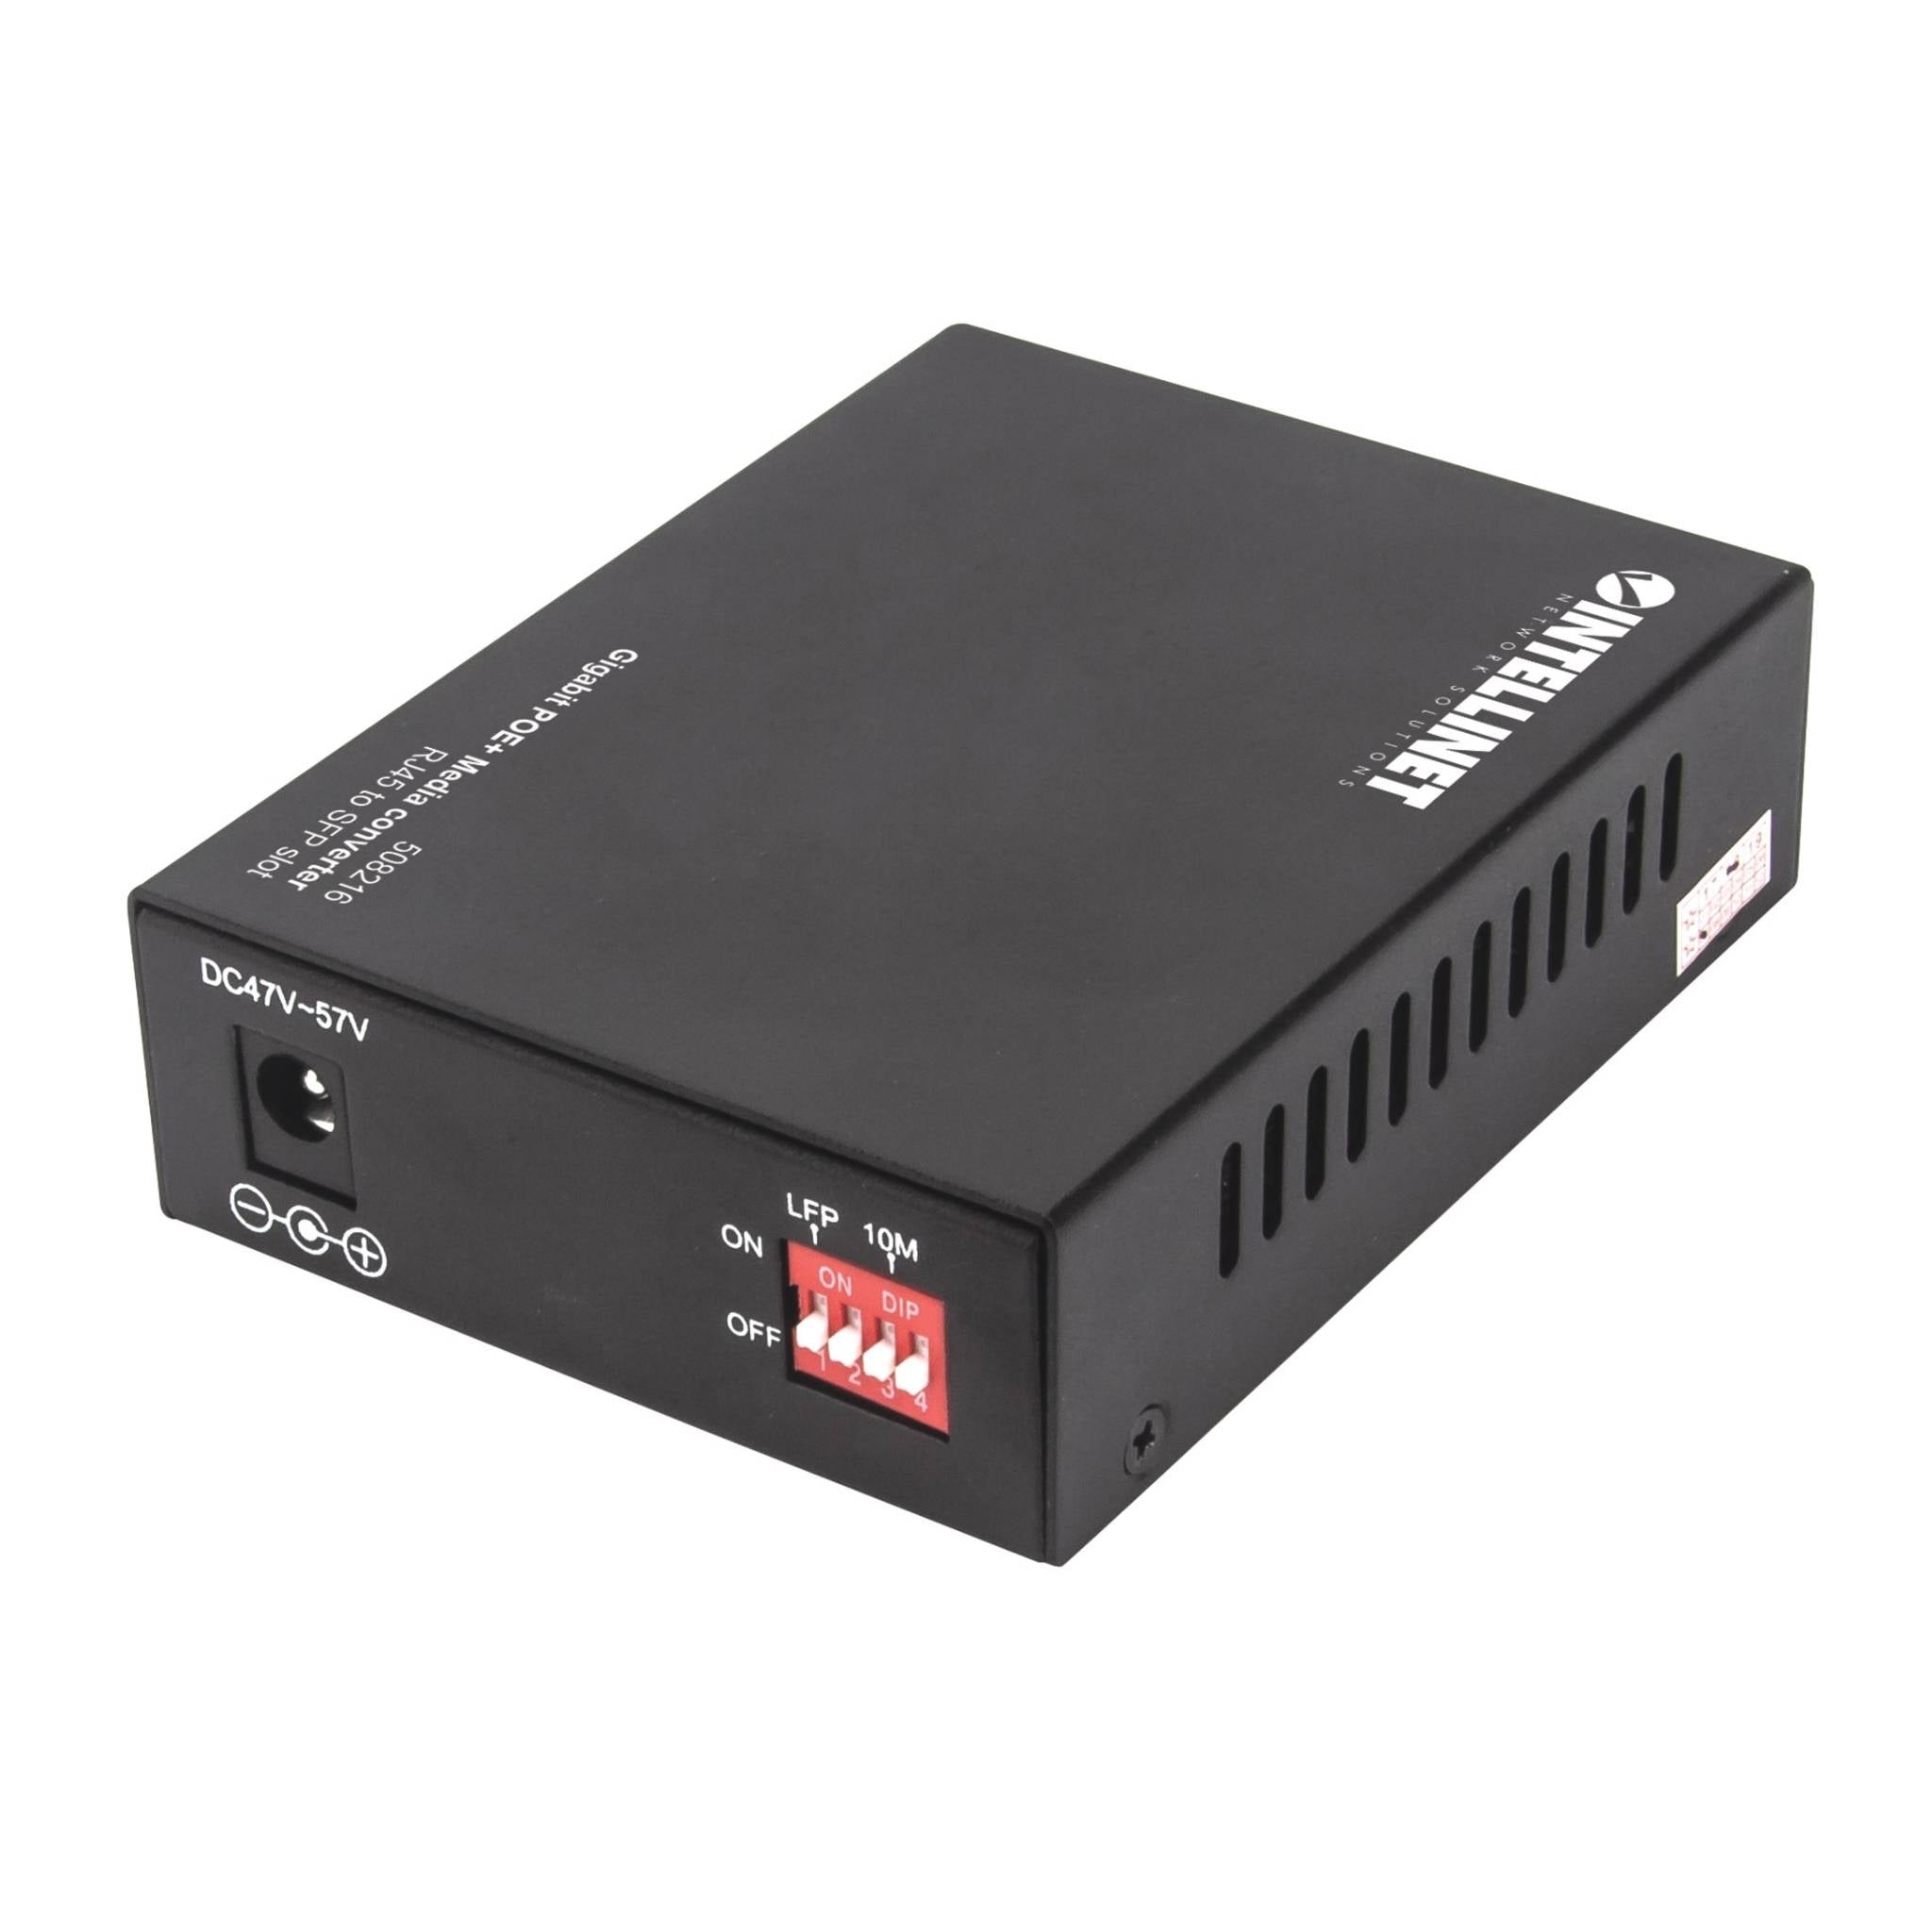 High-Speed Gigabit POE+ Media Converter with 1 x 10/100/1000Base-T RJ45 Port and 1 X SFP Port